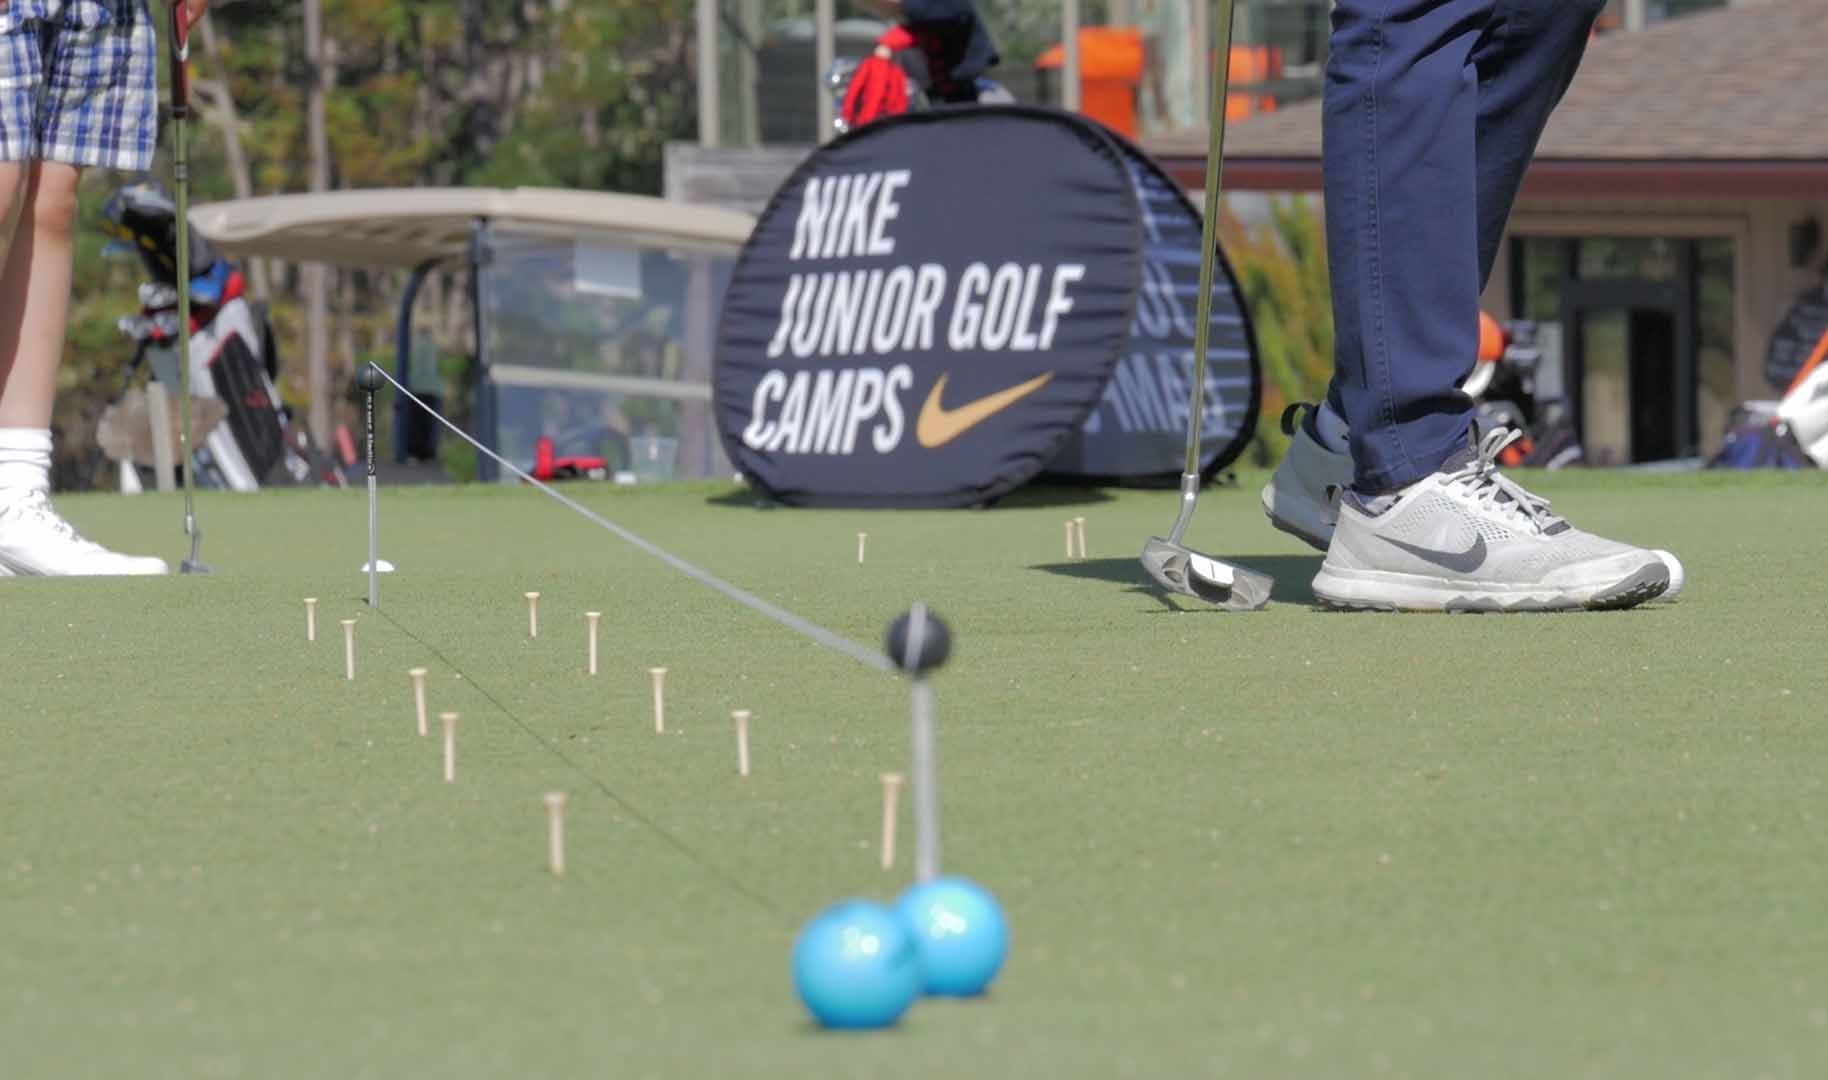 Nike Junior Golf Camps General Release